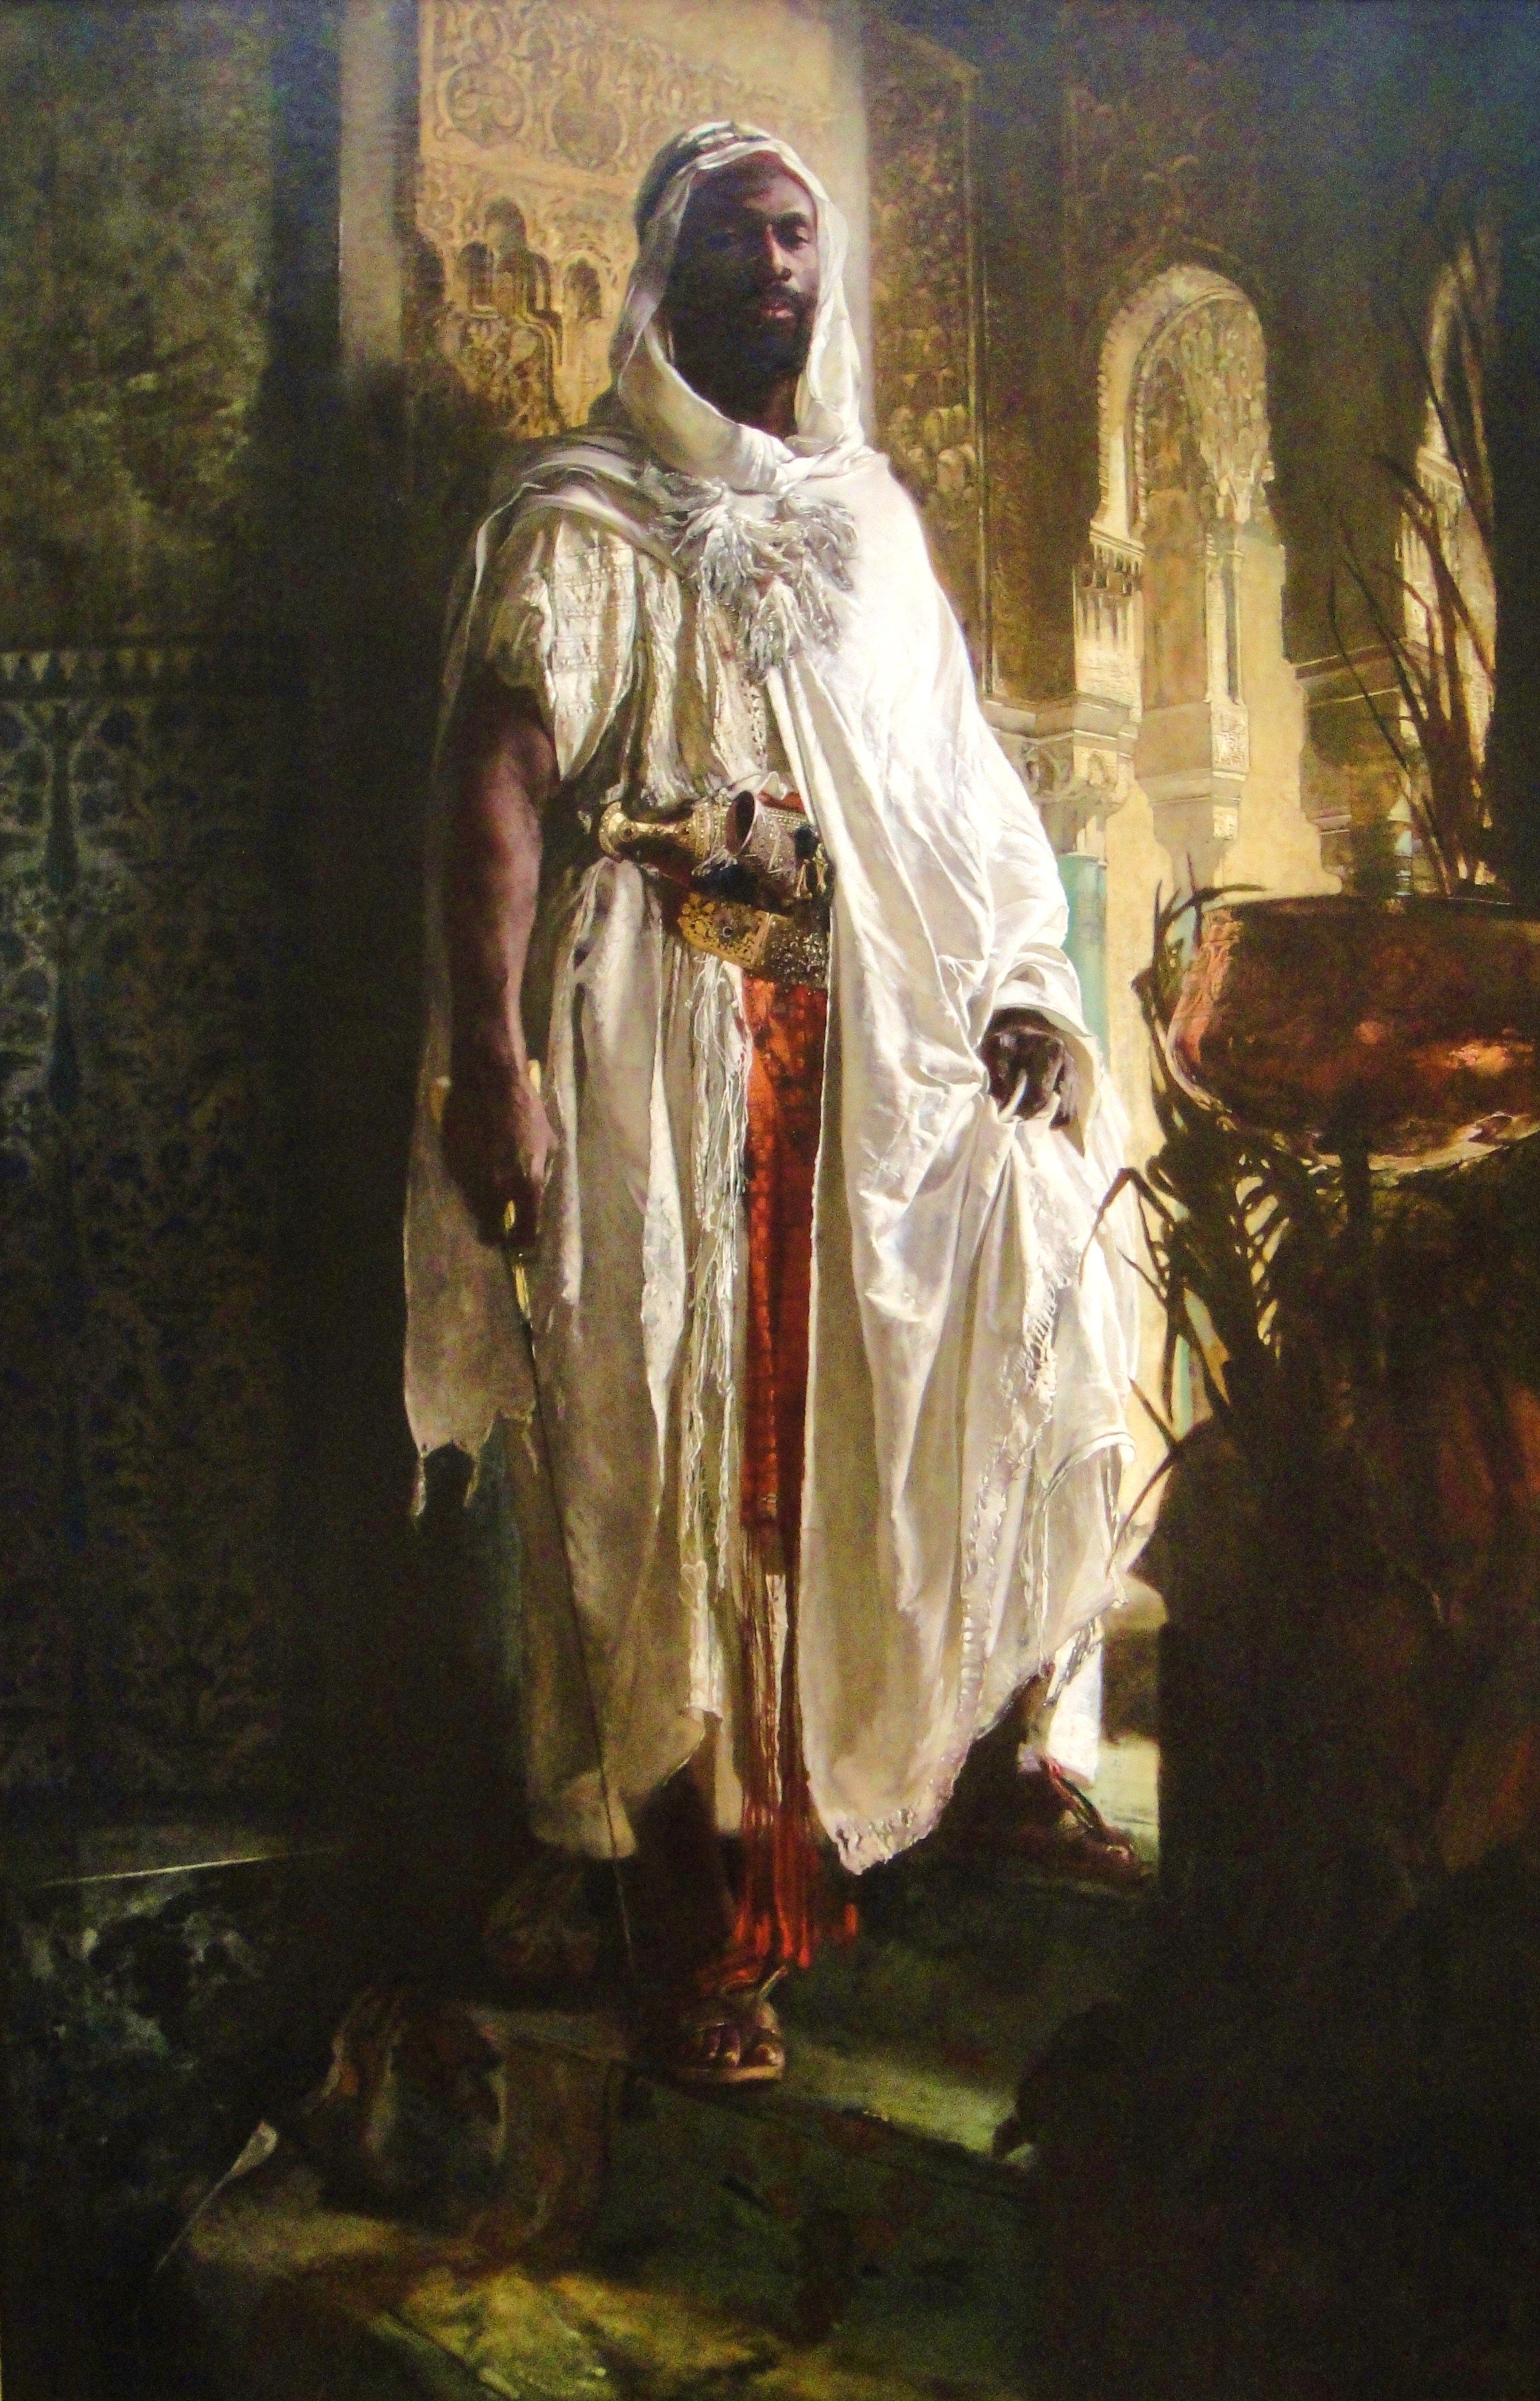 El jefe moro by Eduard Charlemont - 1878 - 150.2 × 97.8 cm Museo de Arte de Filadelfia